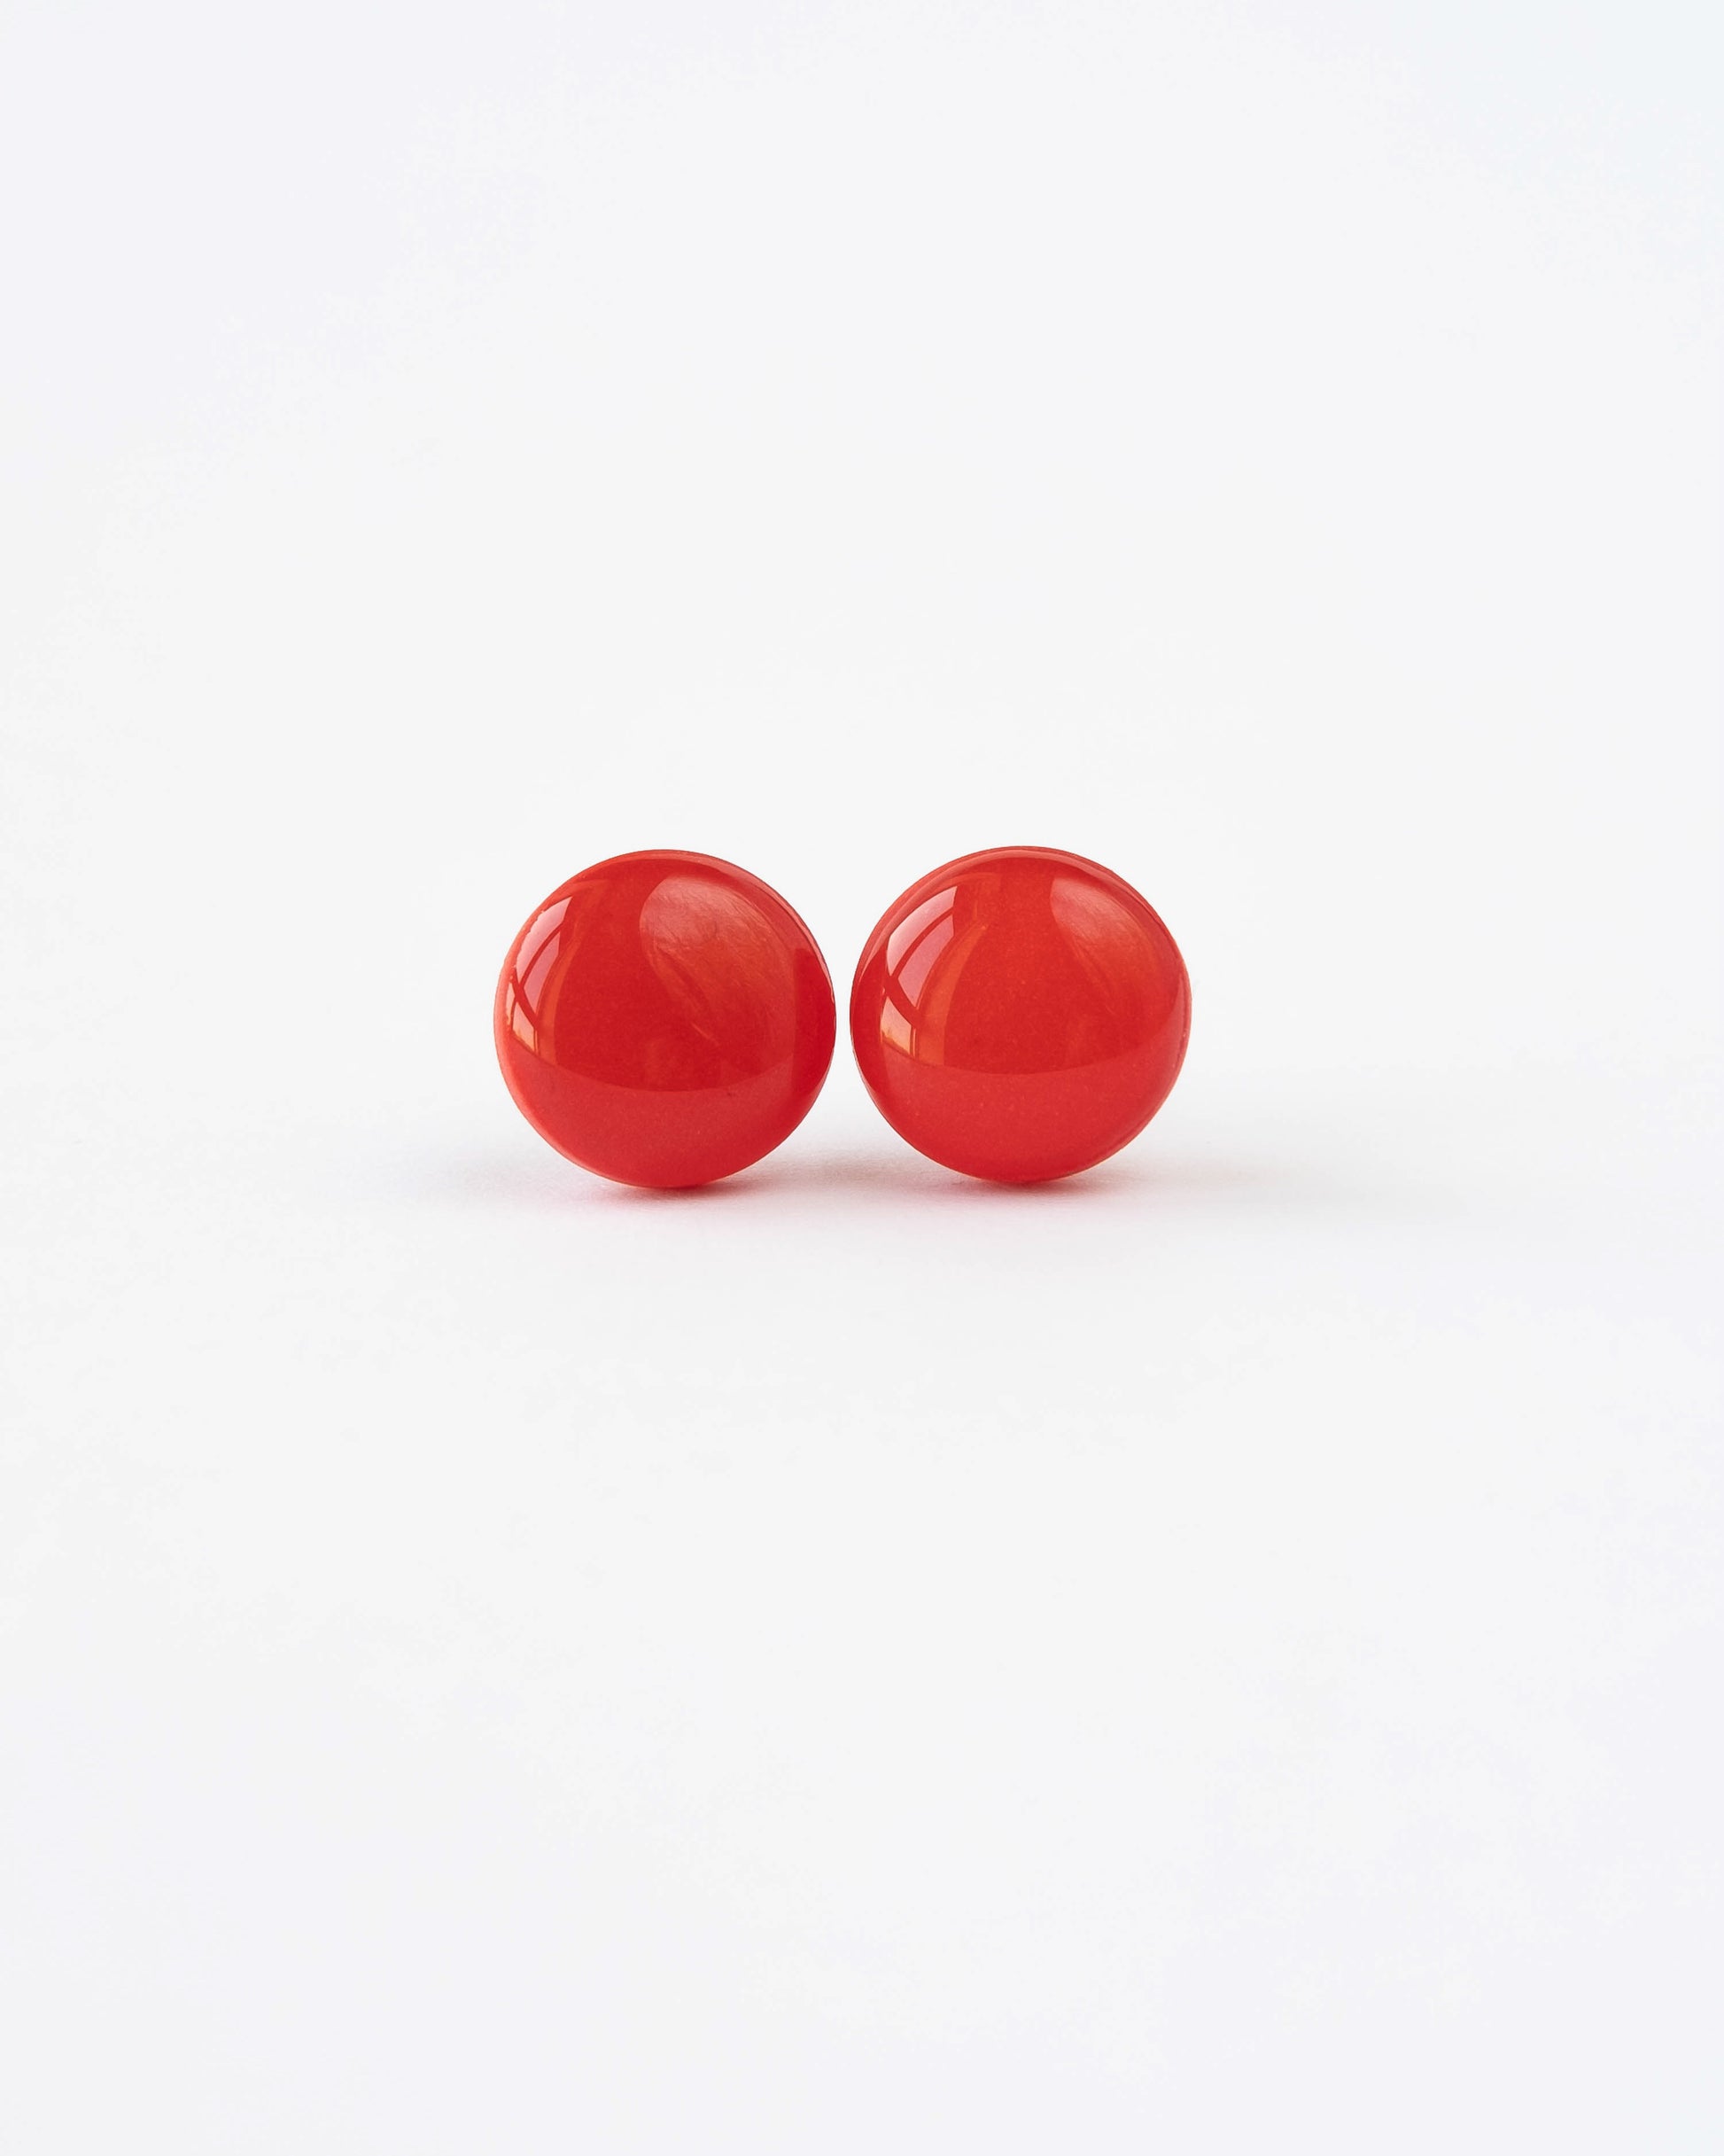 Hot red stud earrings freeshipping - Ollijewelry